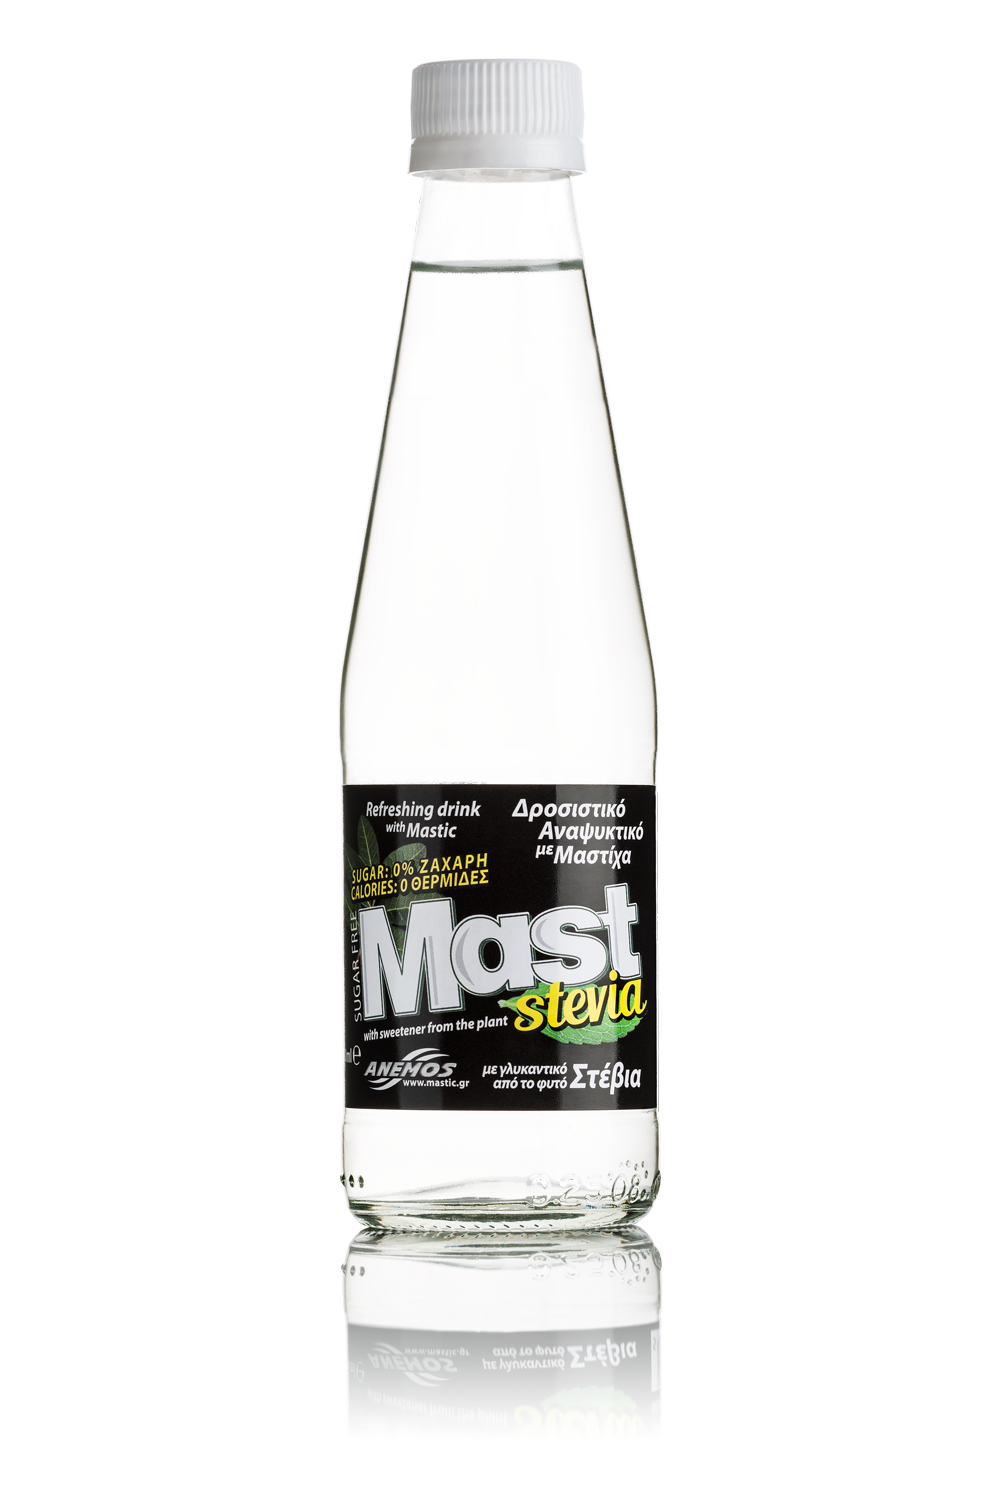 Mast stevia. Ανθρακούχο αναψυκτικό με Στέβια. Γυάλινο μπουκάλι 250ml